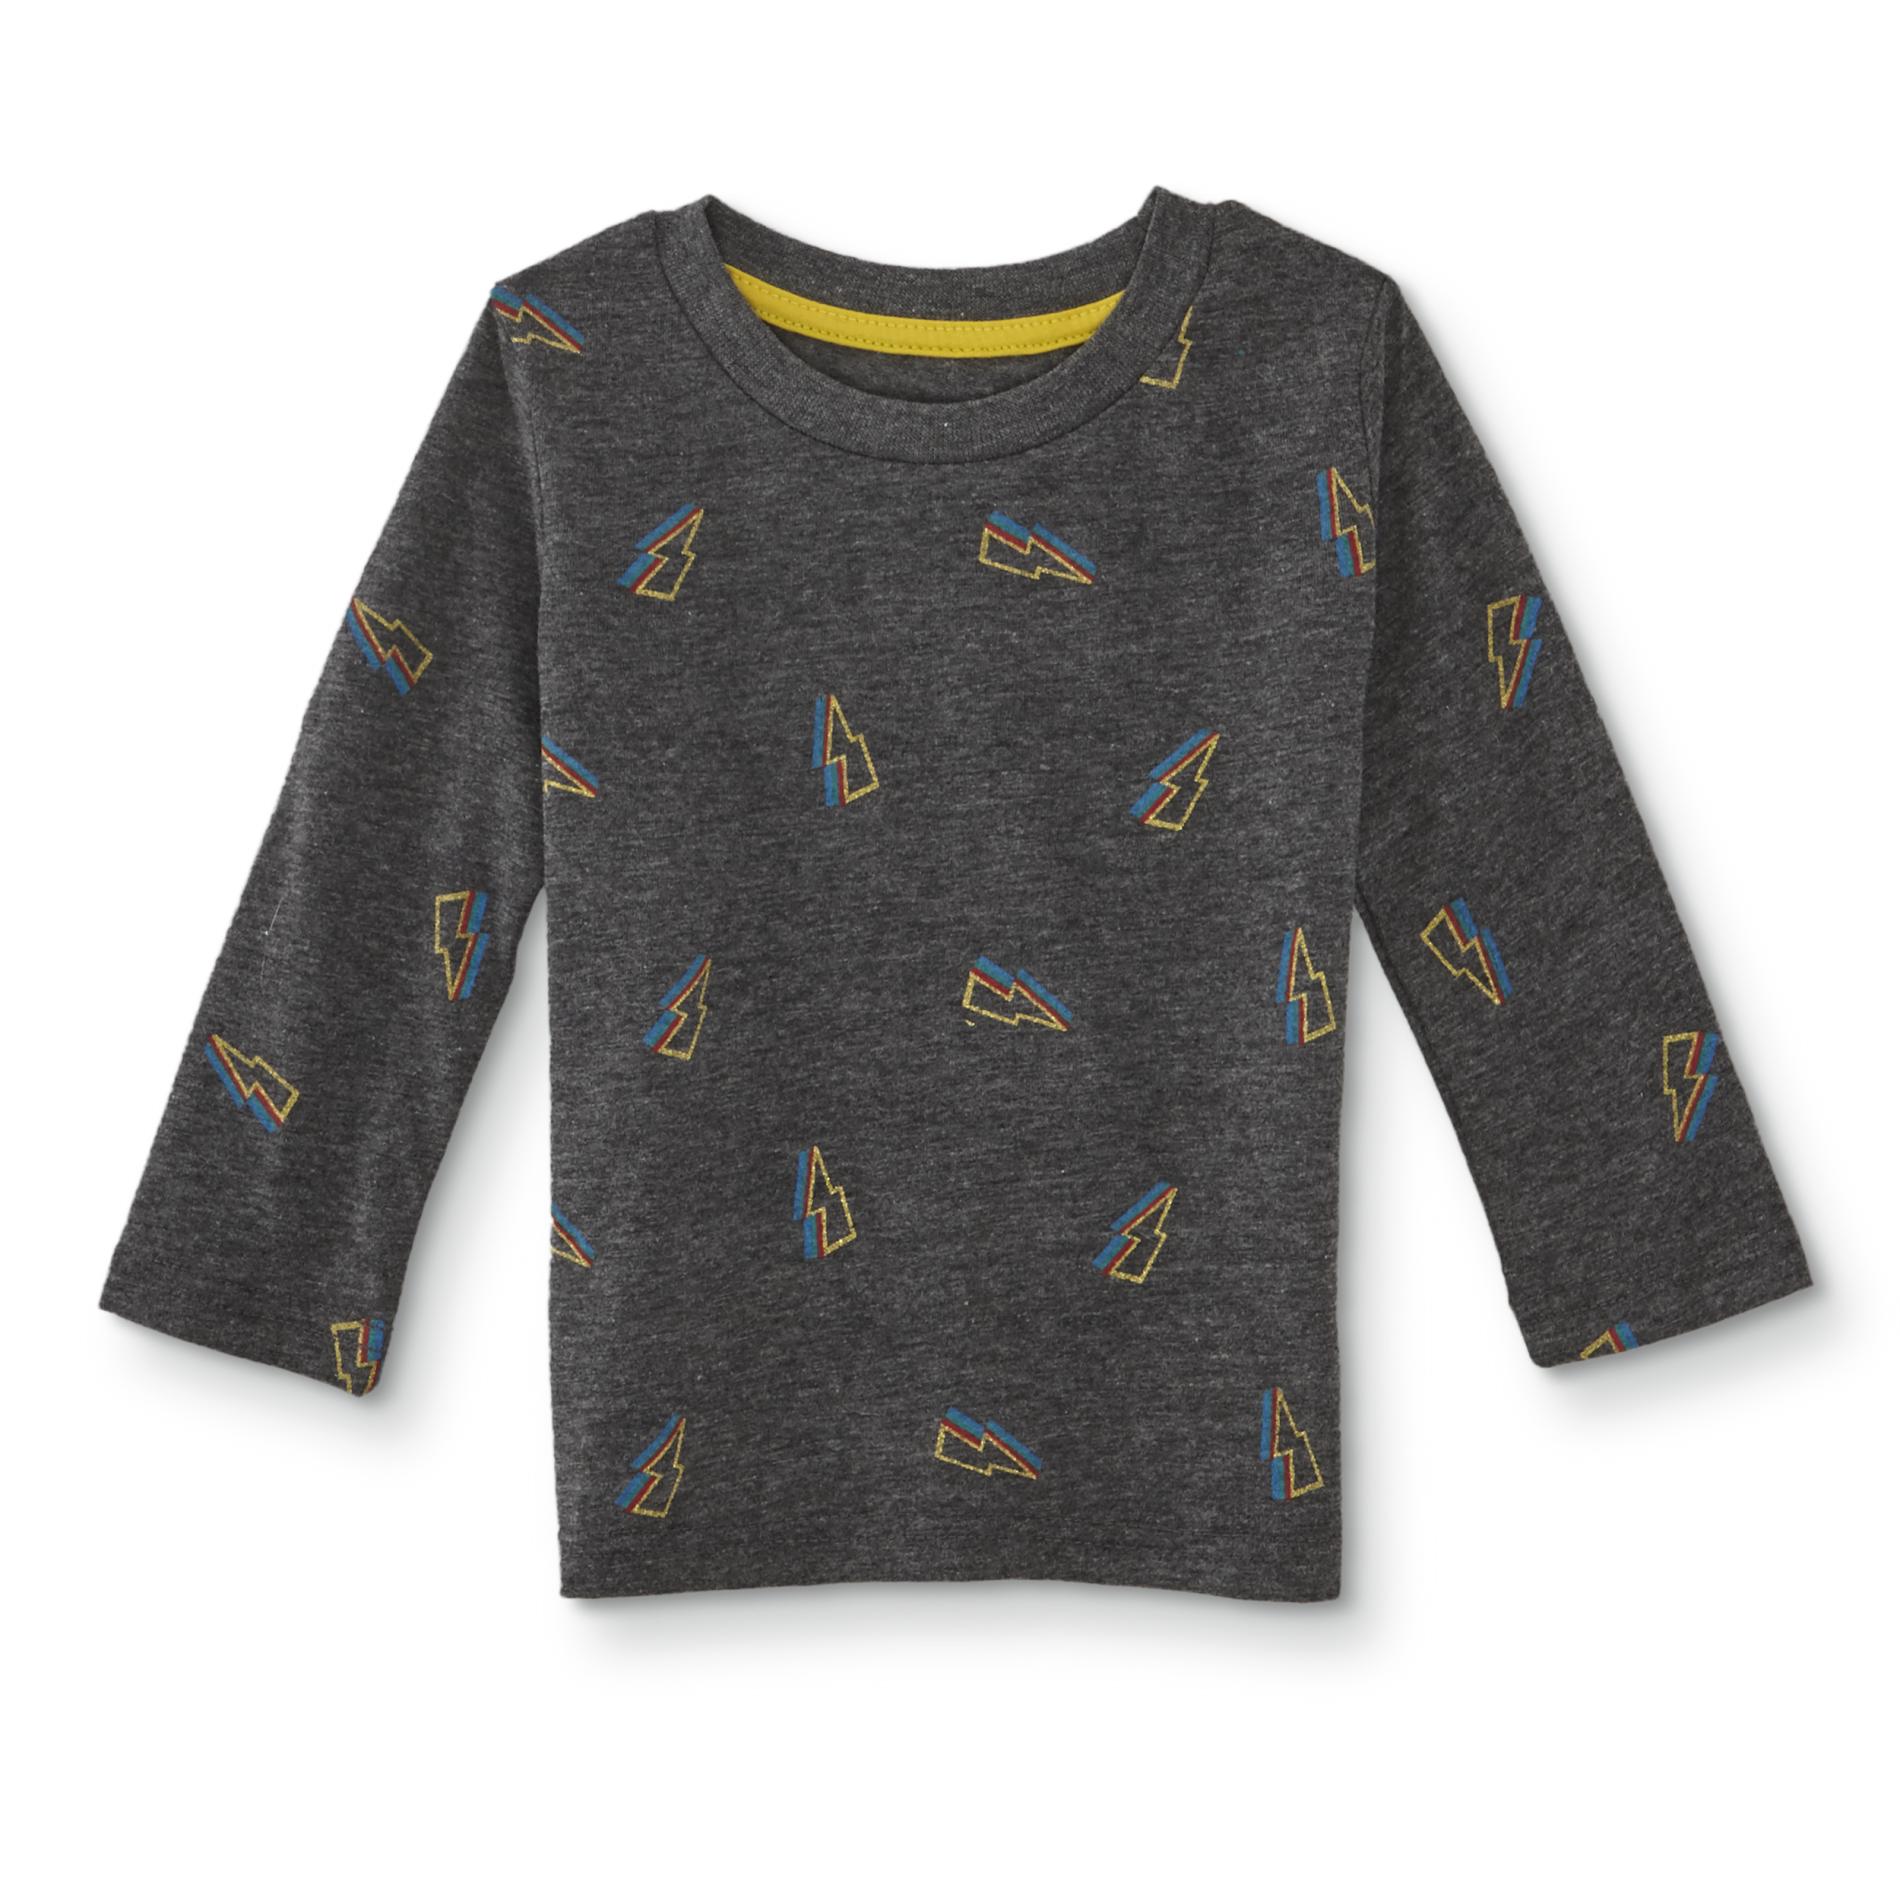 Toughskins Infant & Toddler Boys' Long-Sleeve Graphic T-Shirt - Lightning Bolts